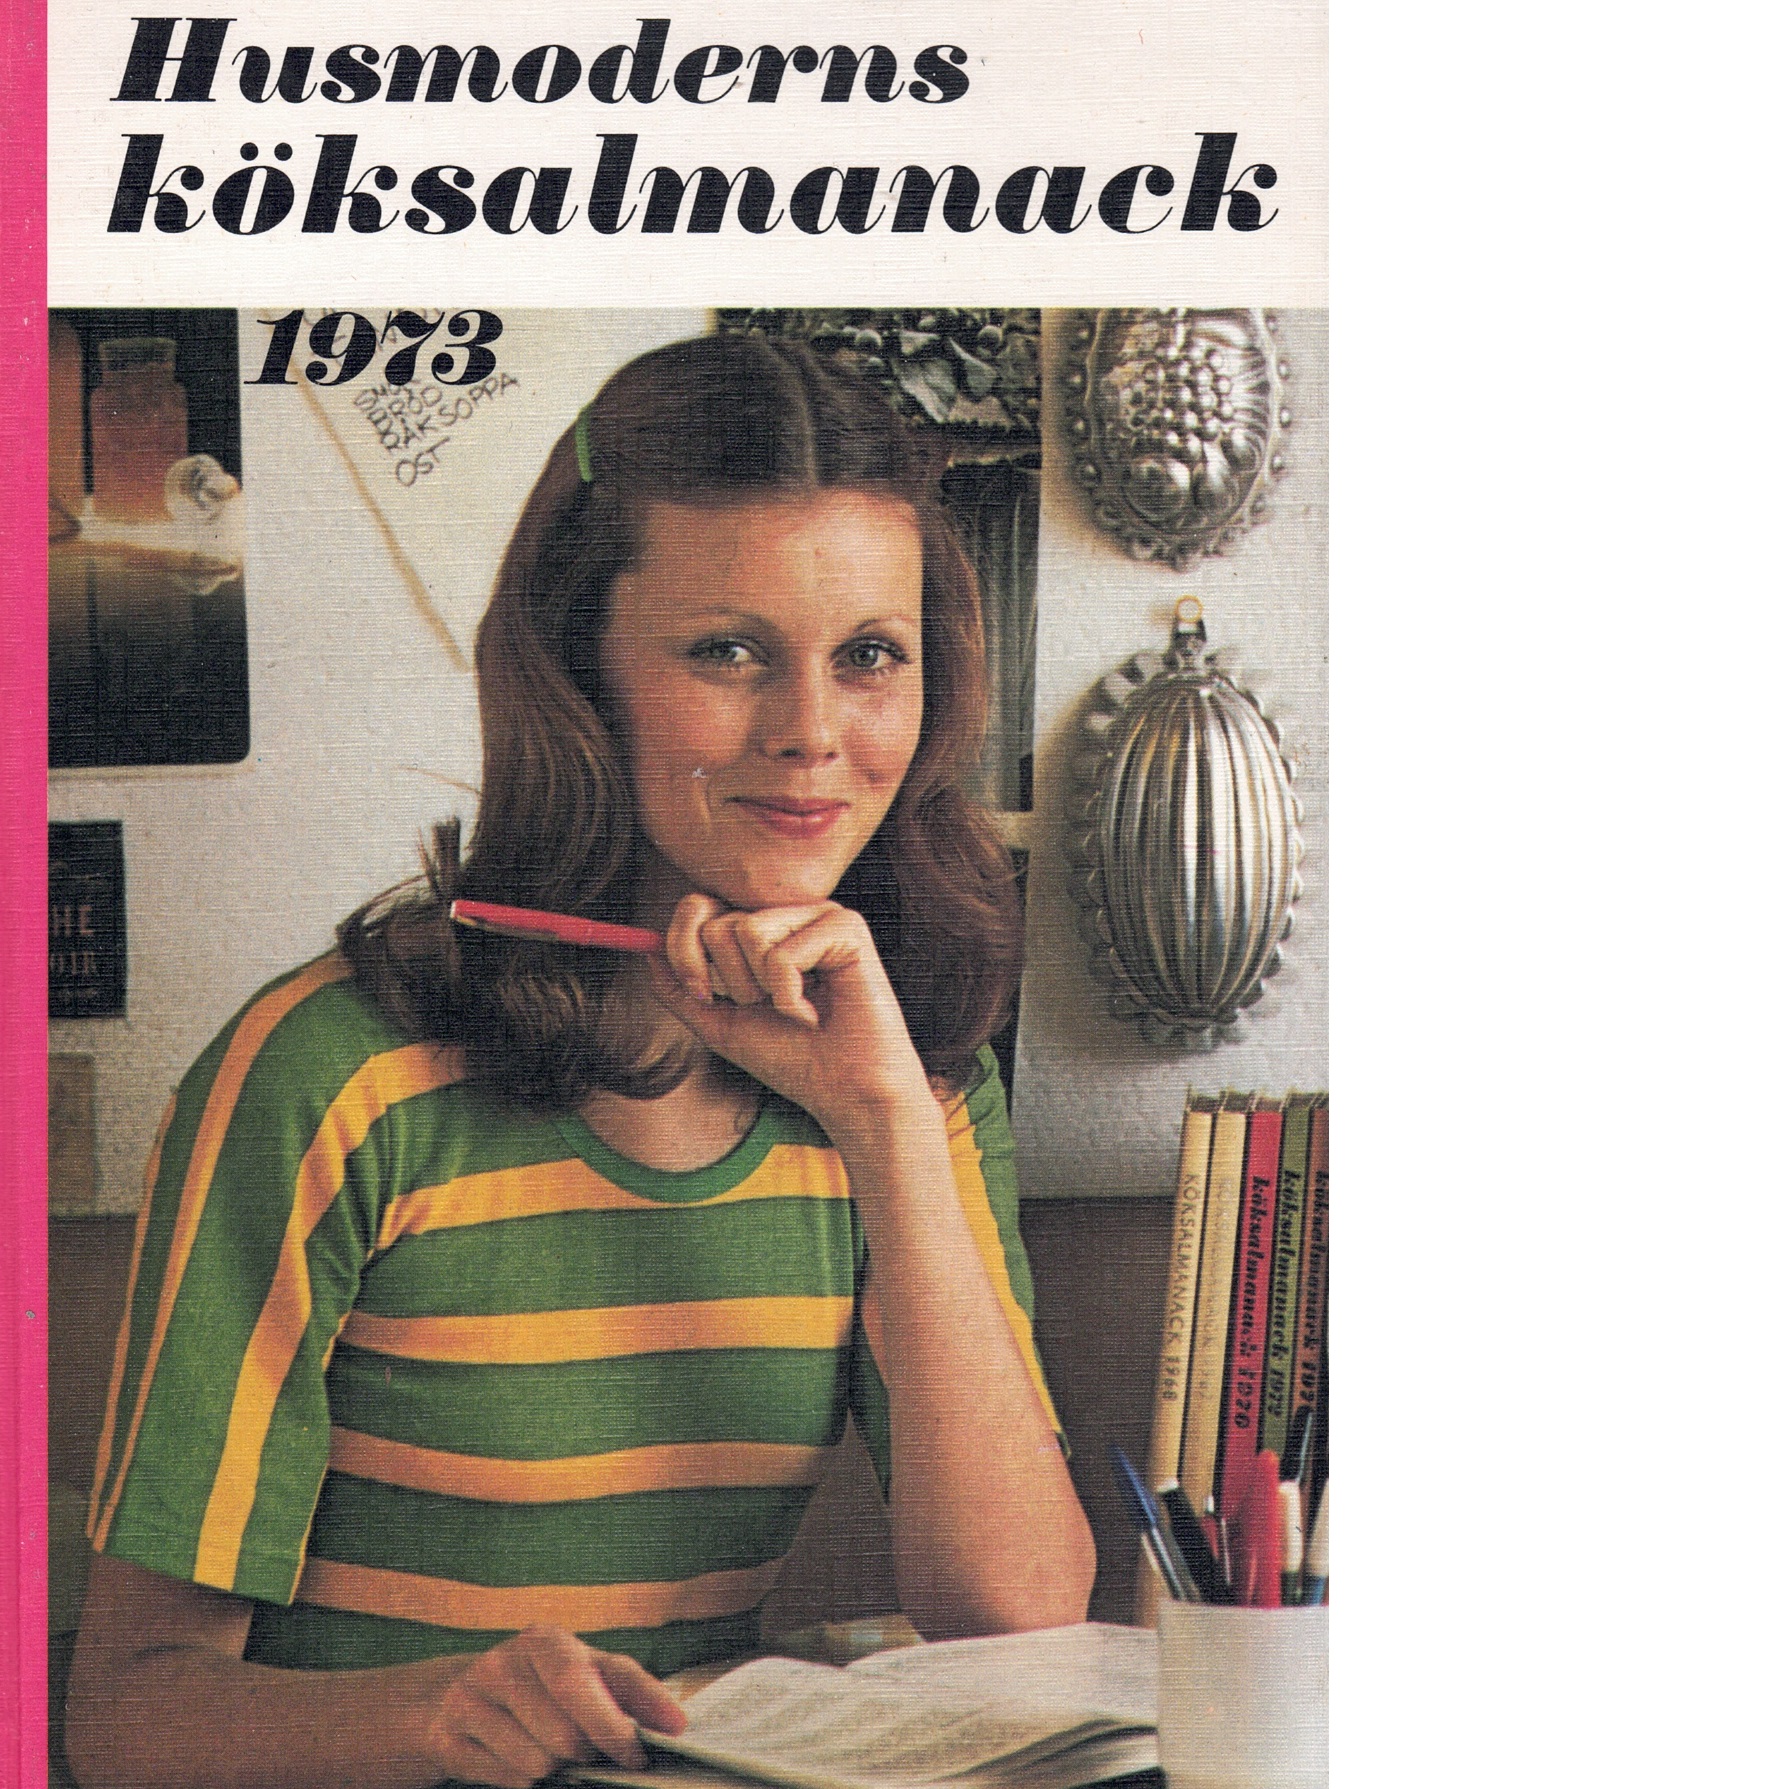 Husmoderns Köksalmanack 1973 - Red.